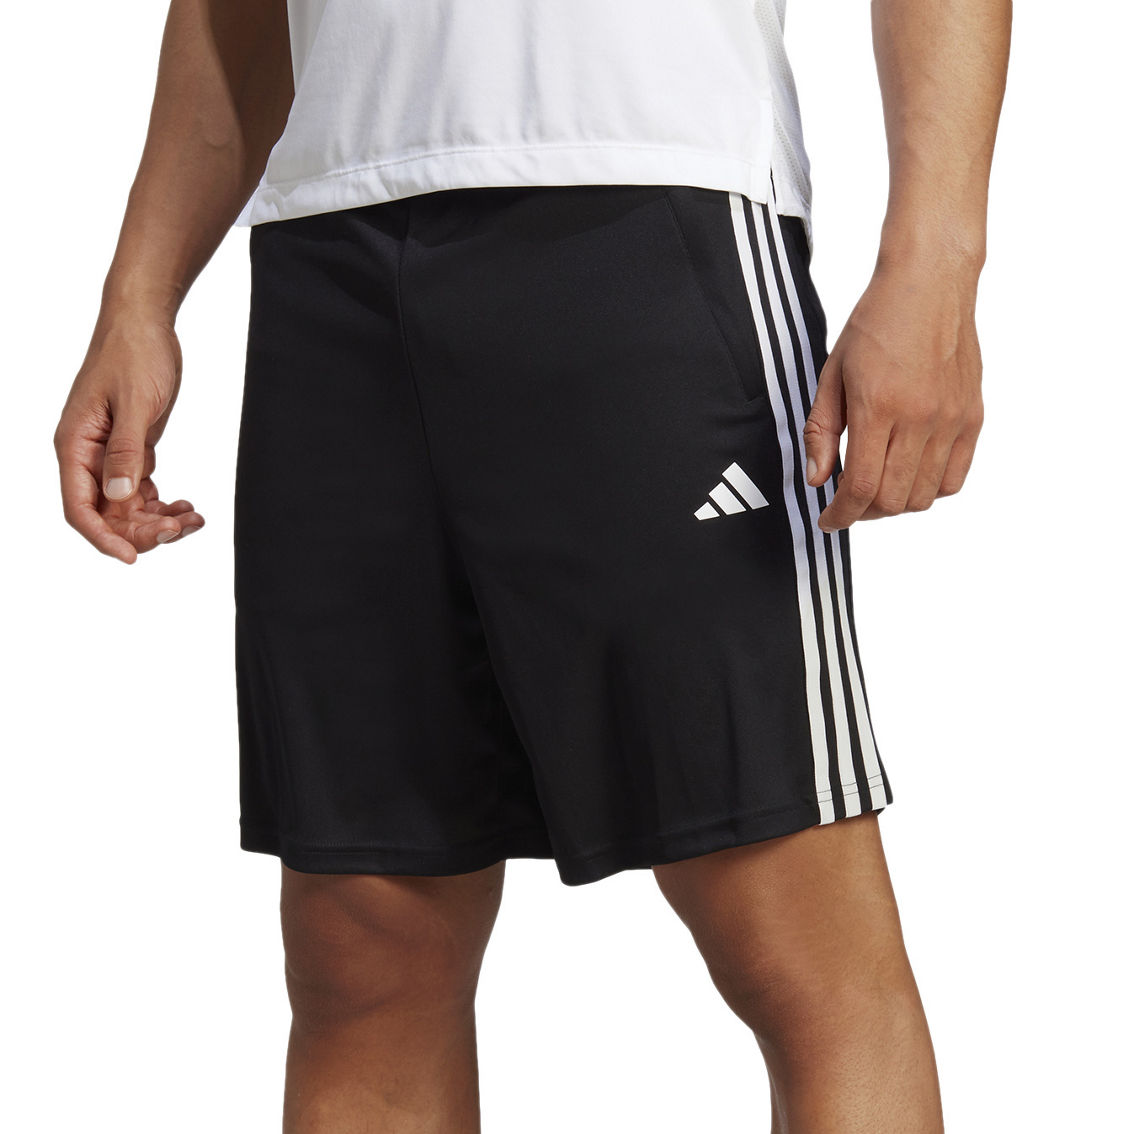 Adidas Train Essentials 3-stripes Shorts | Shorts | Clothing ...